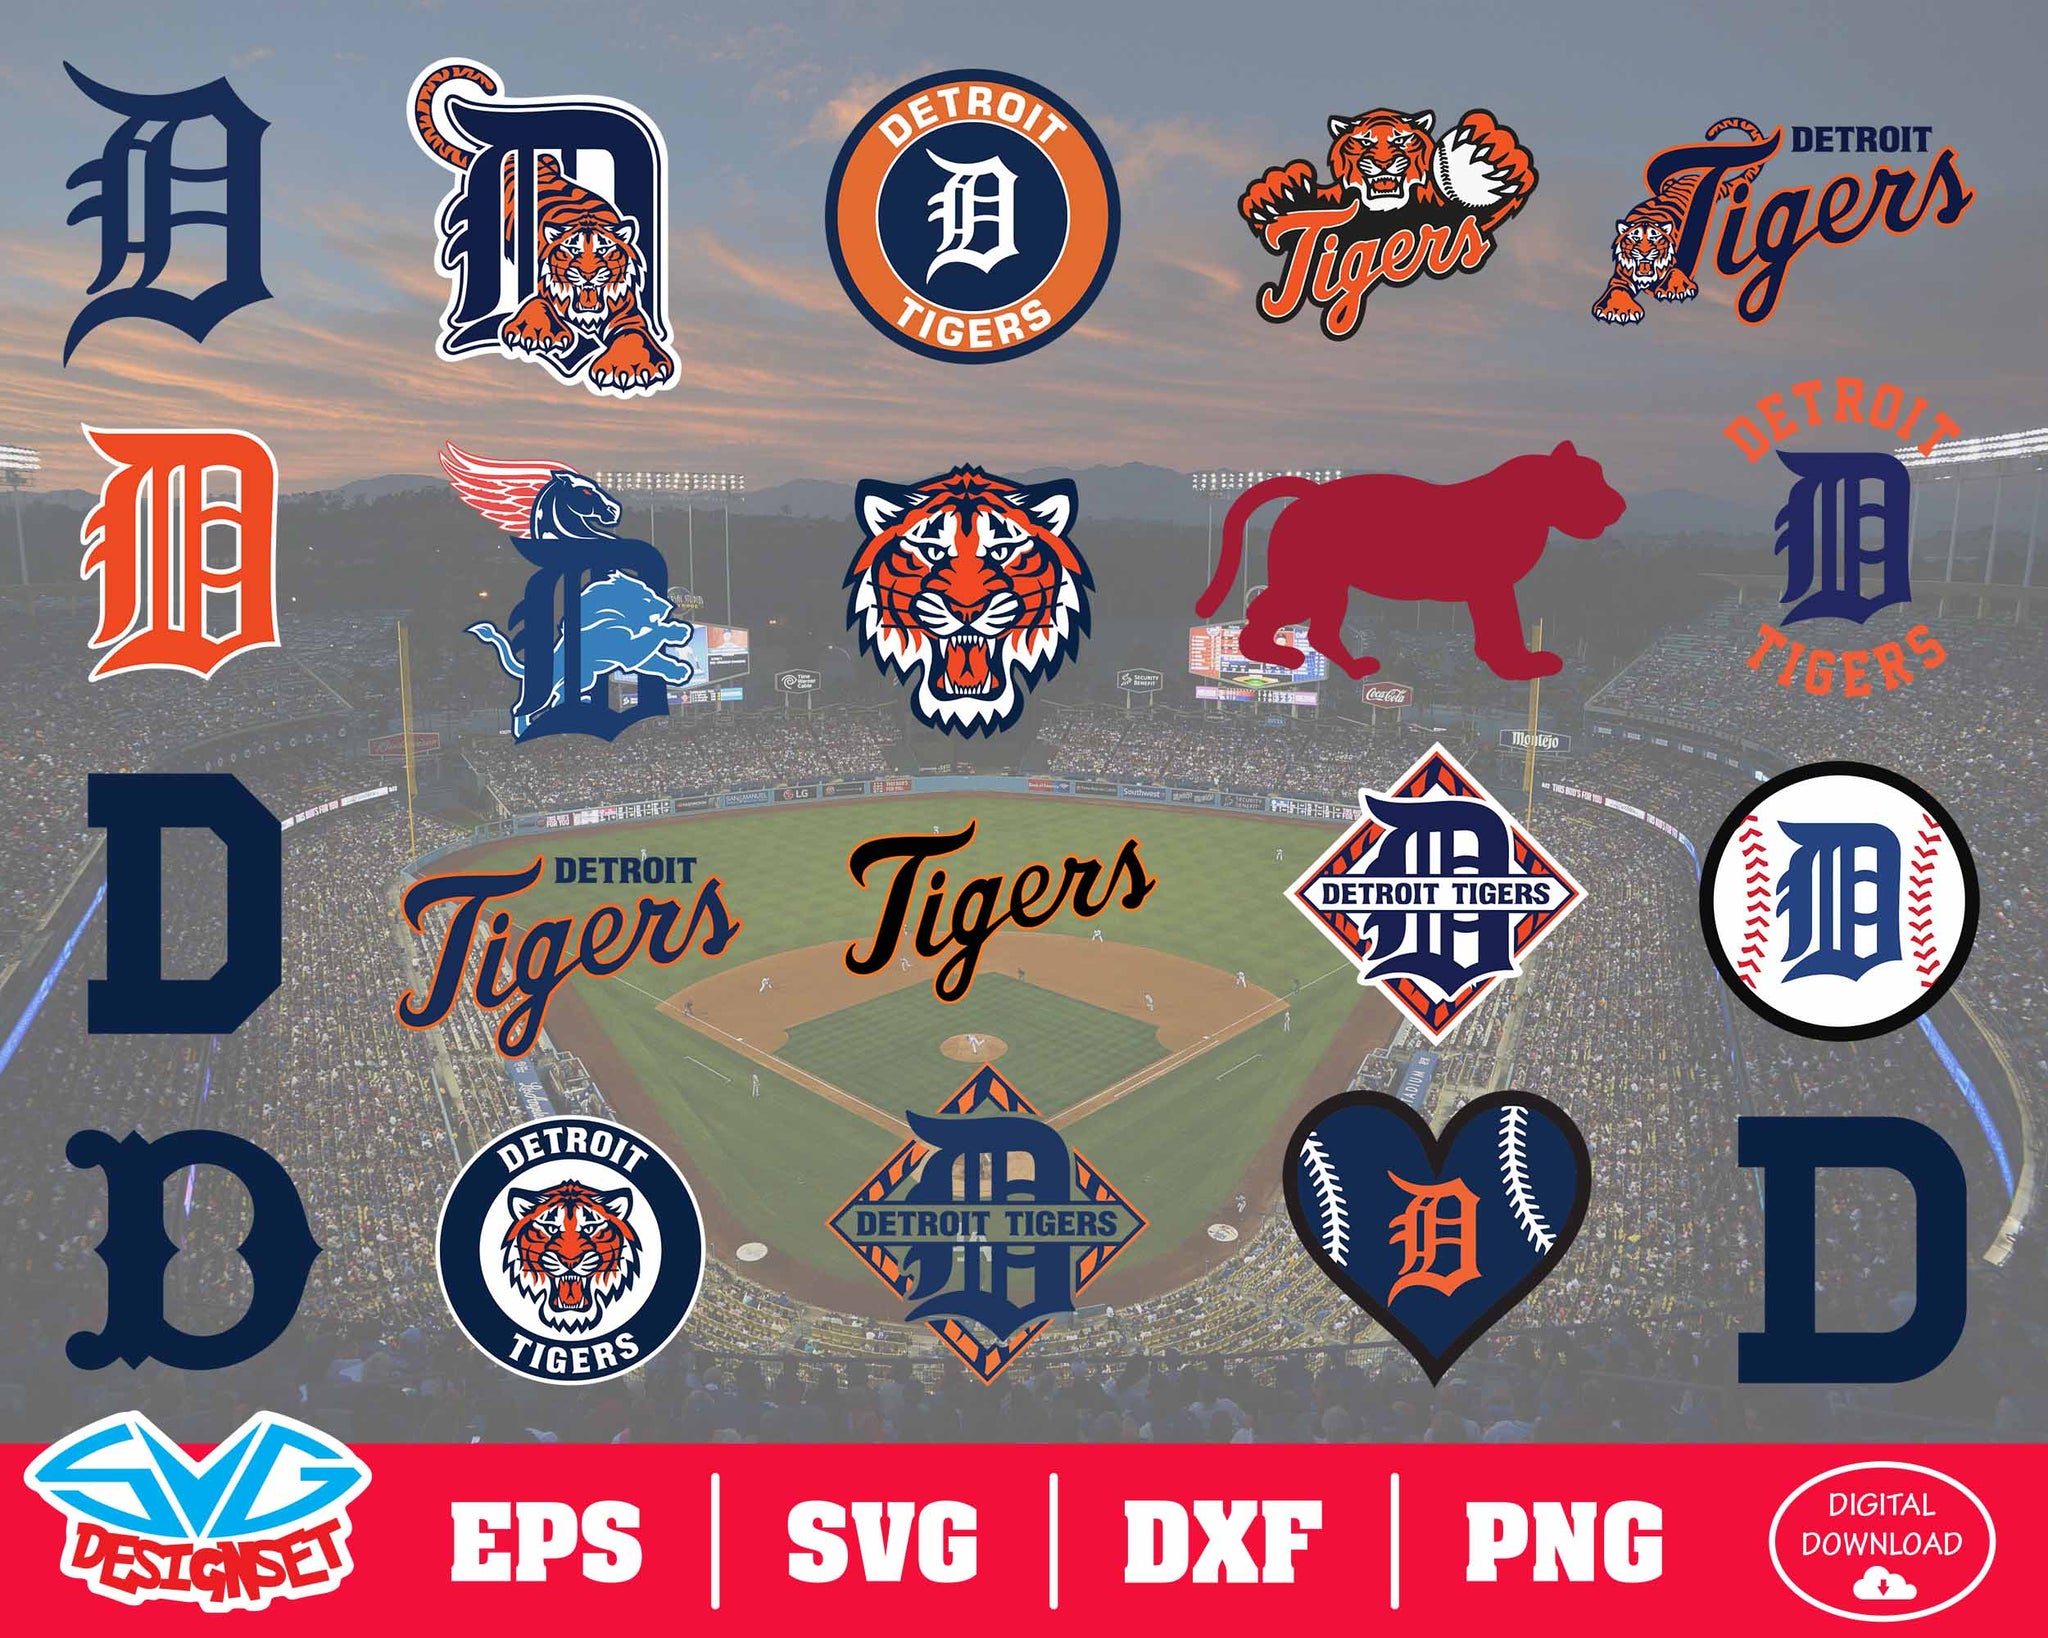 Detroit Tigers Logo PNG Vector (SVG) Free Download